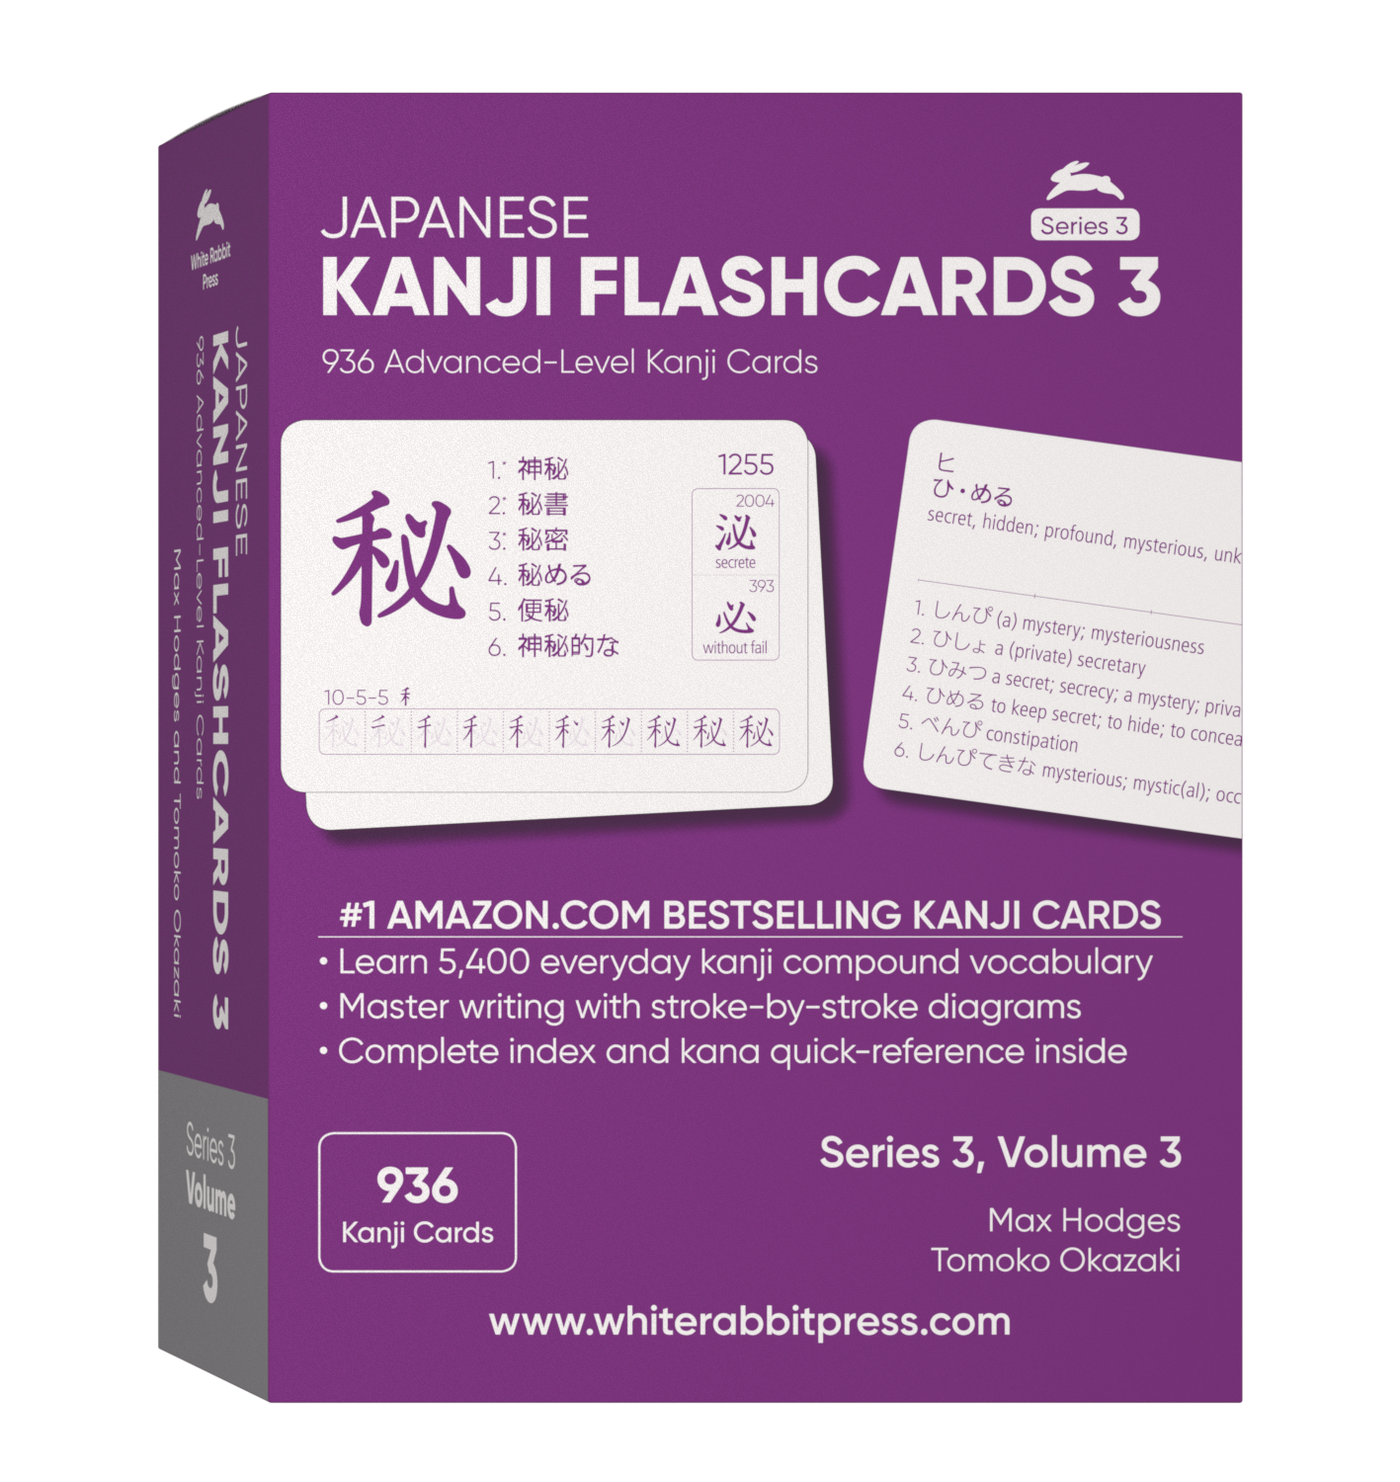 Japanese Kanji Flashcards, Series 2 Volume 3 by White Rabbit Press